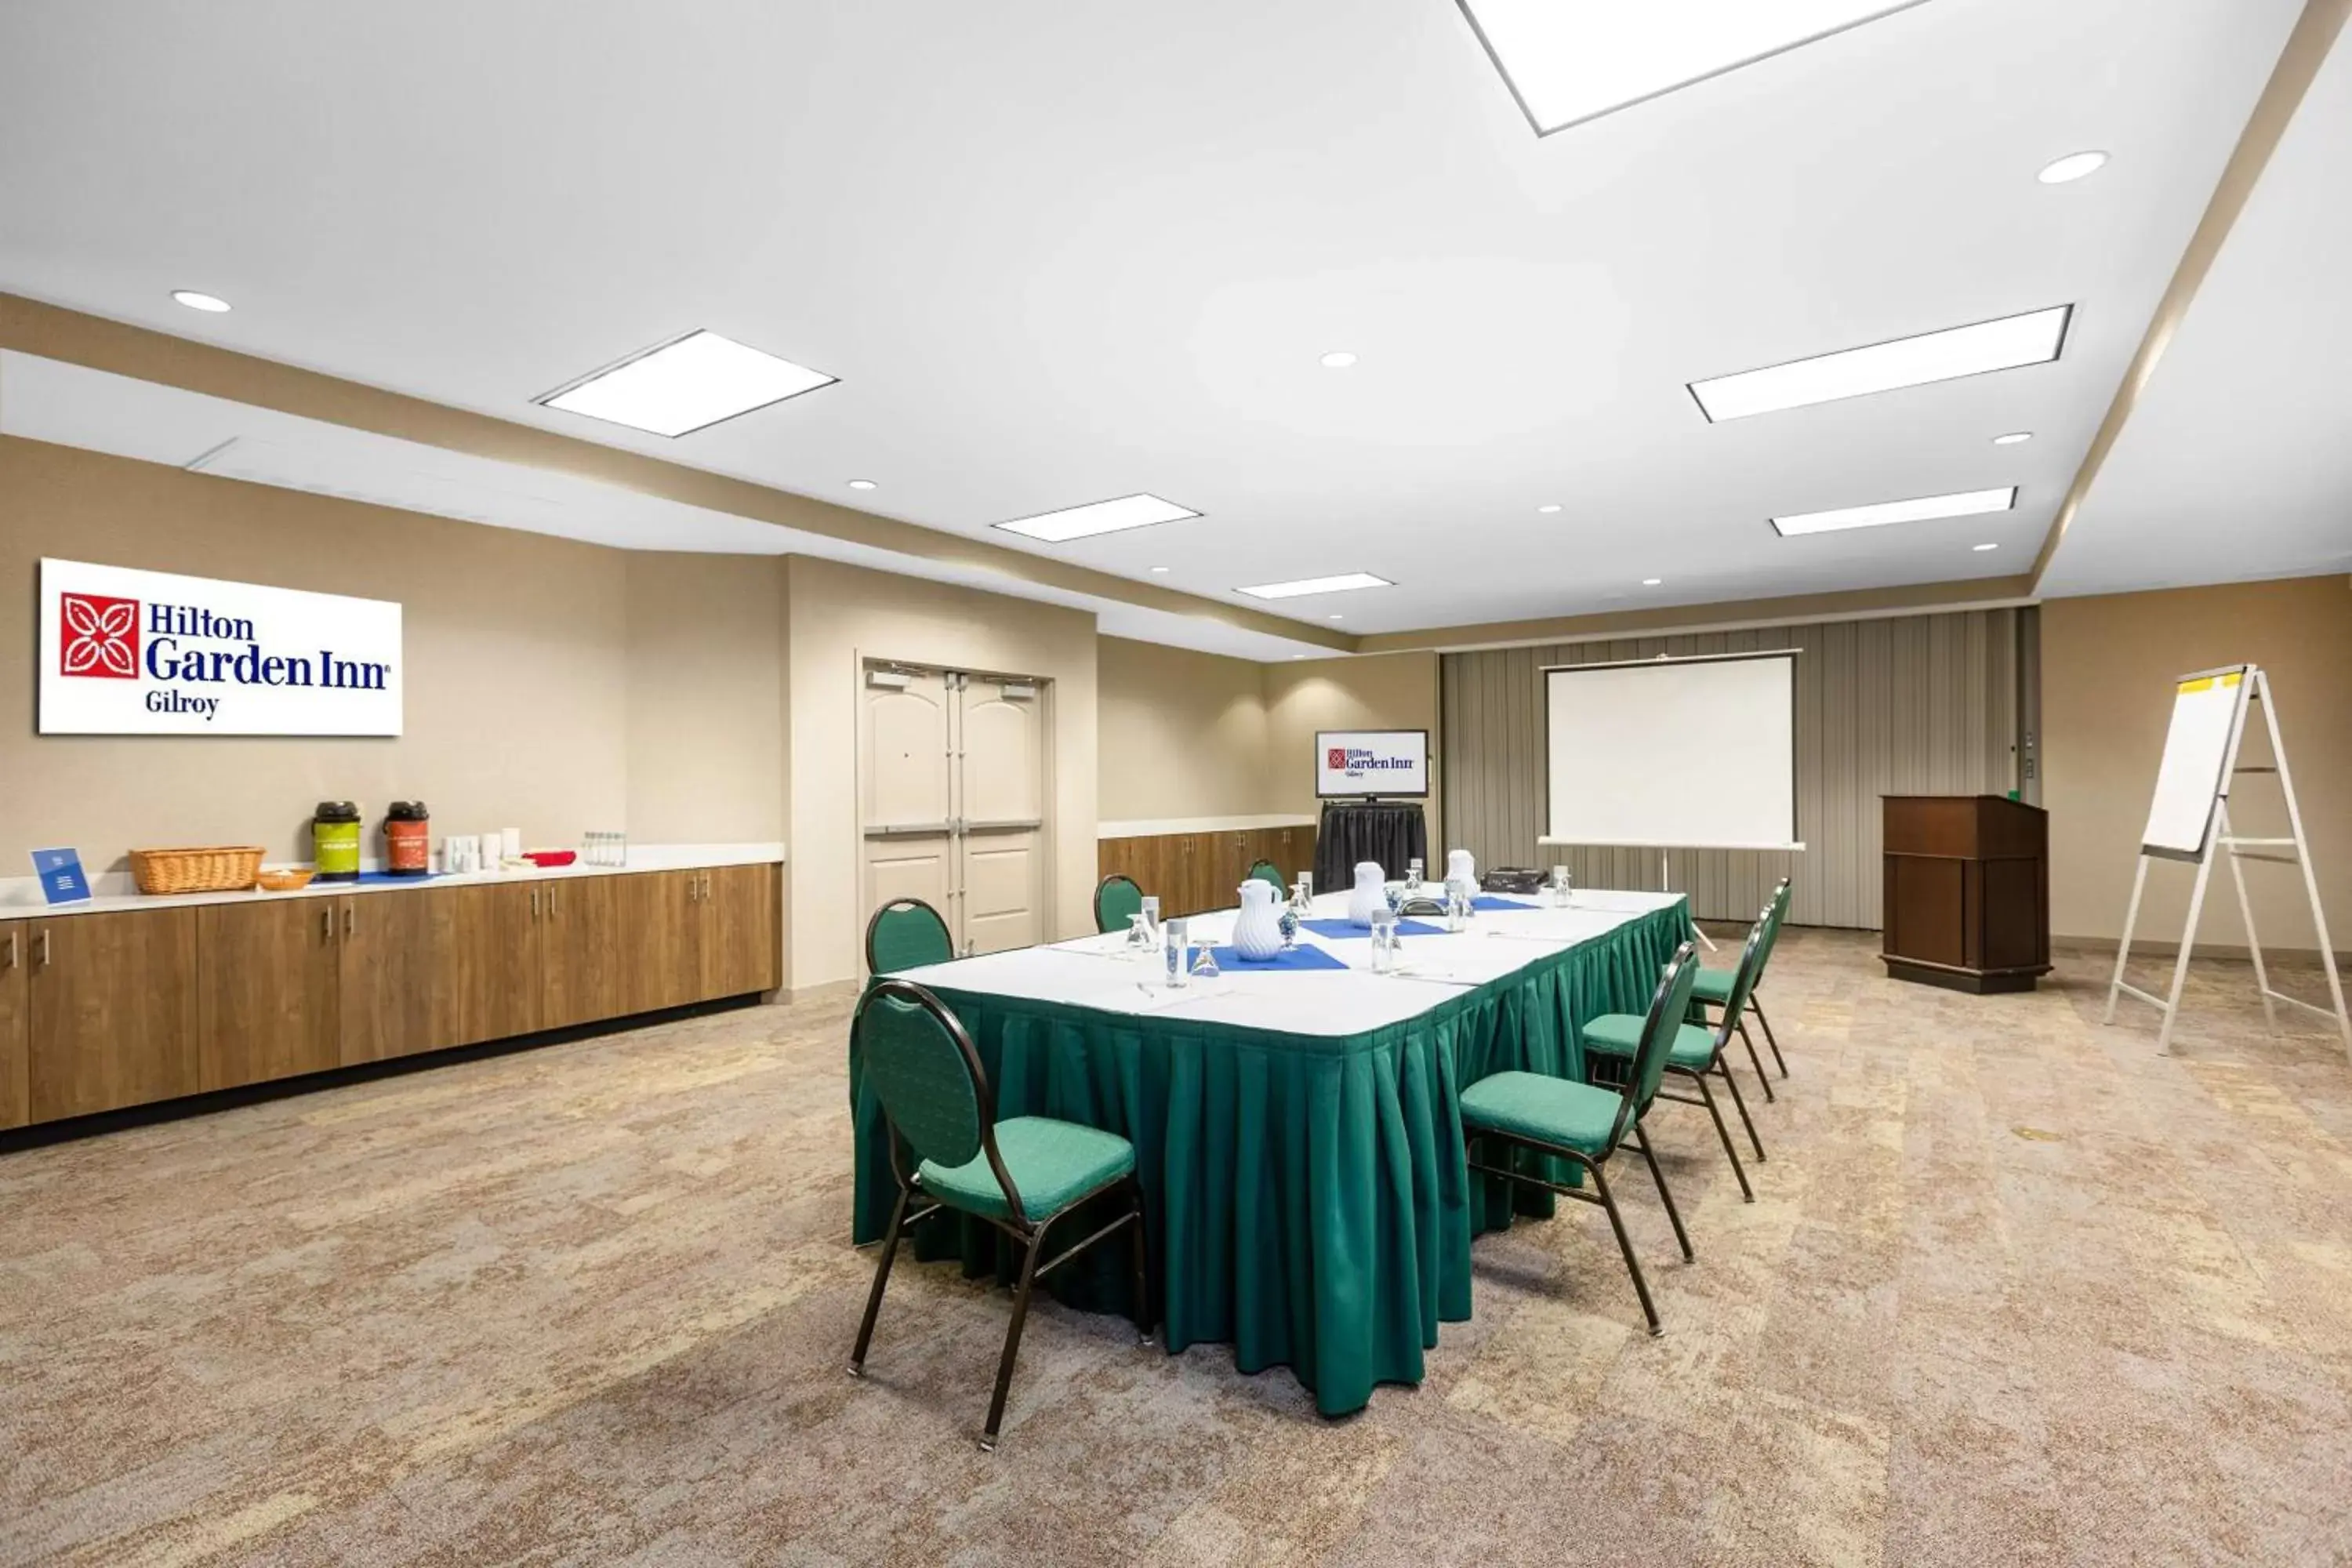 Meeting/conference room in Hilton Garden Inn Gilroy